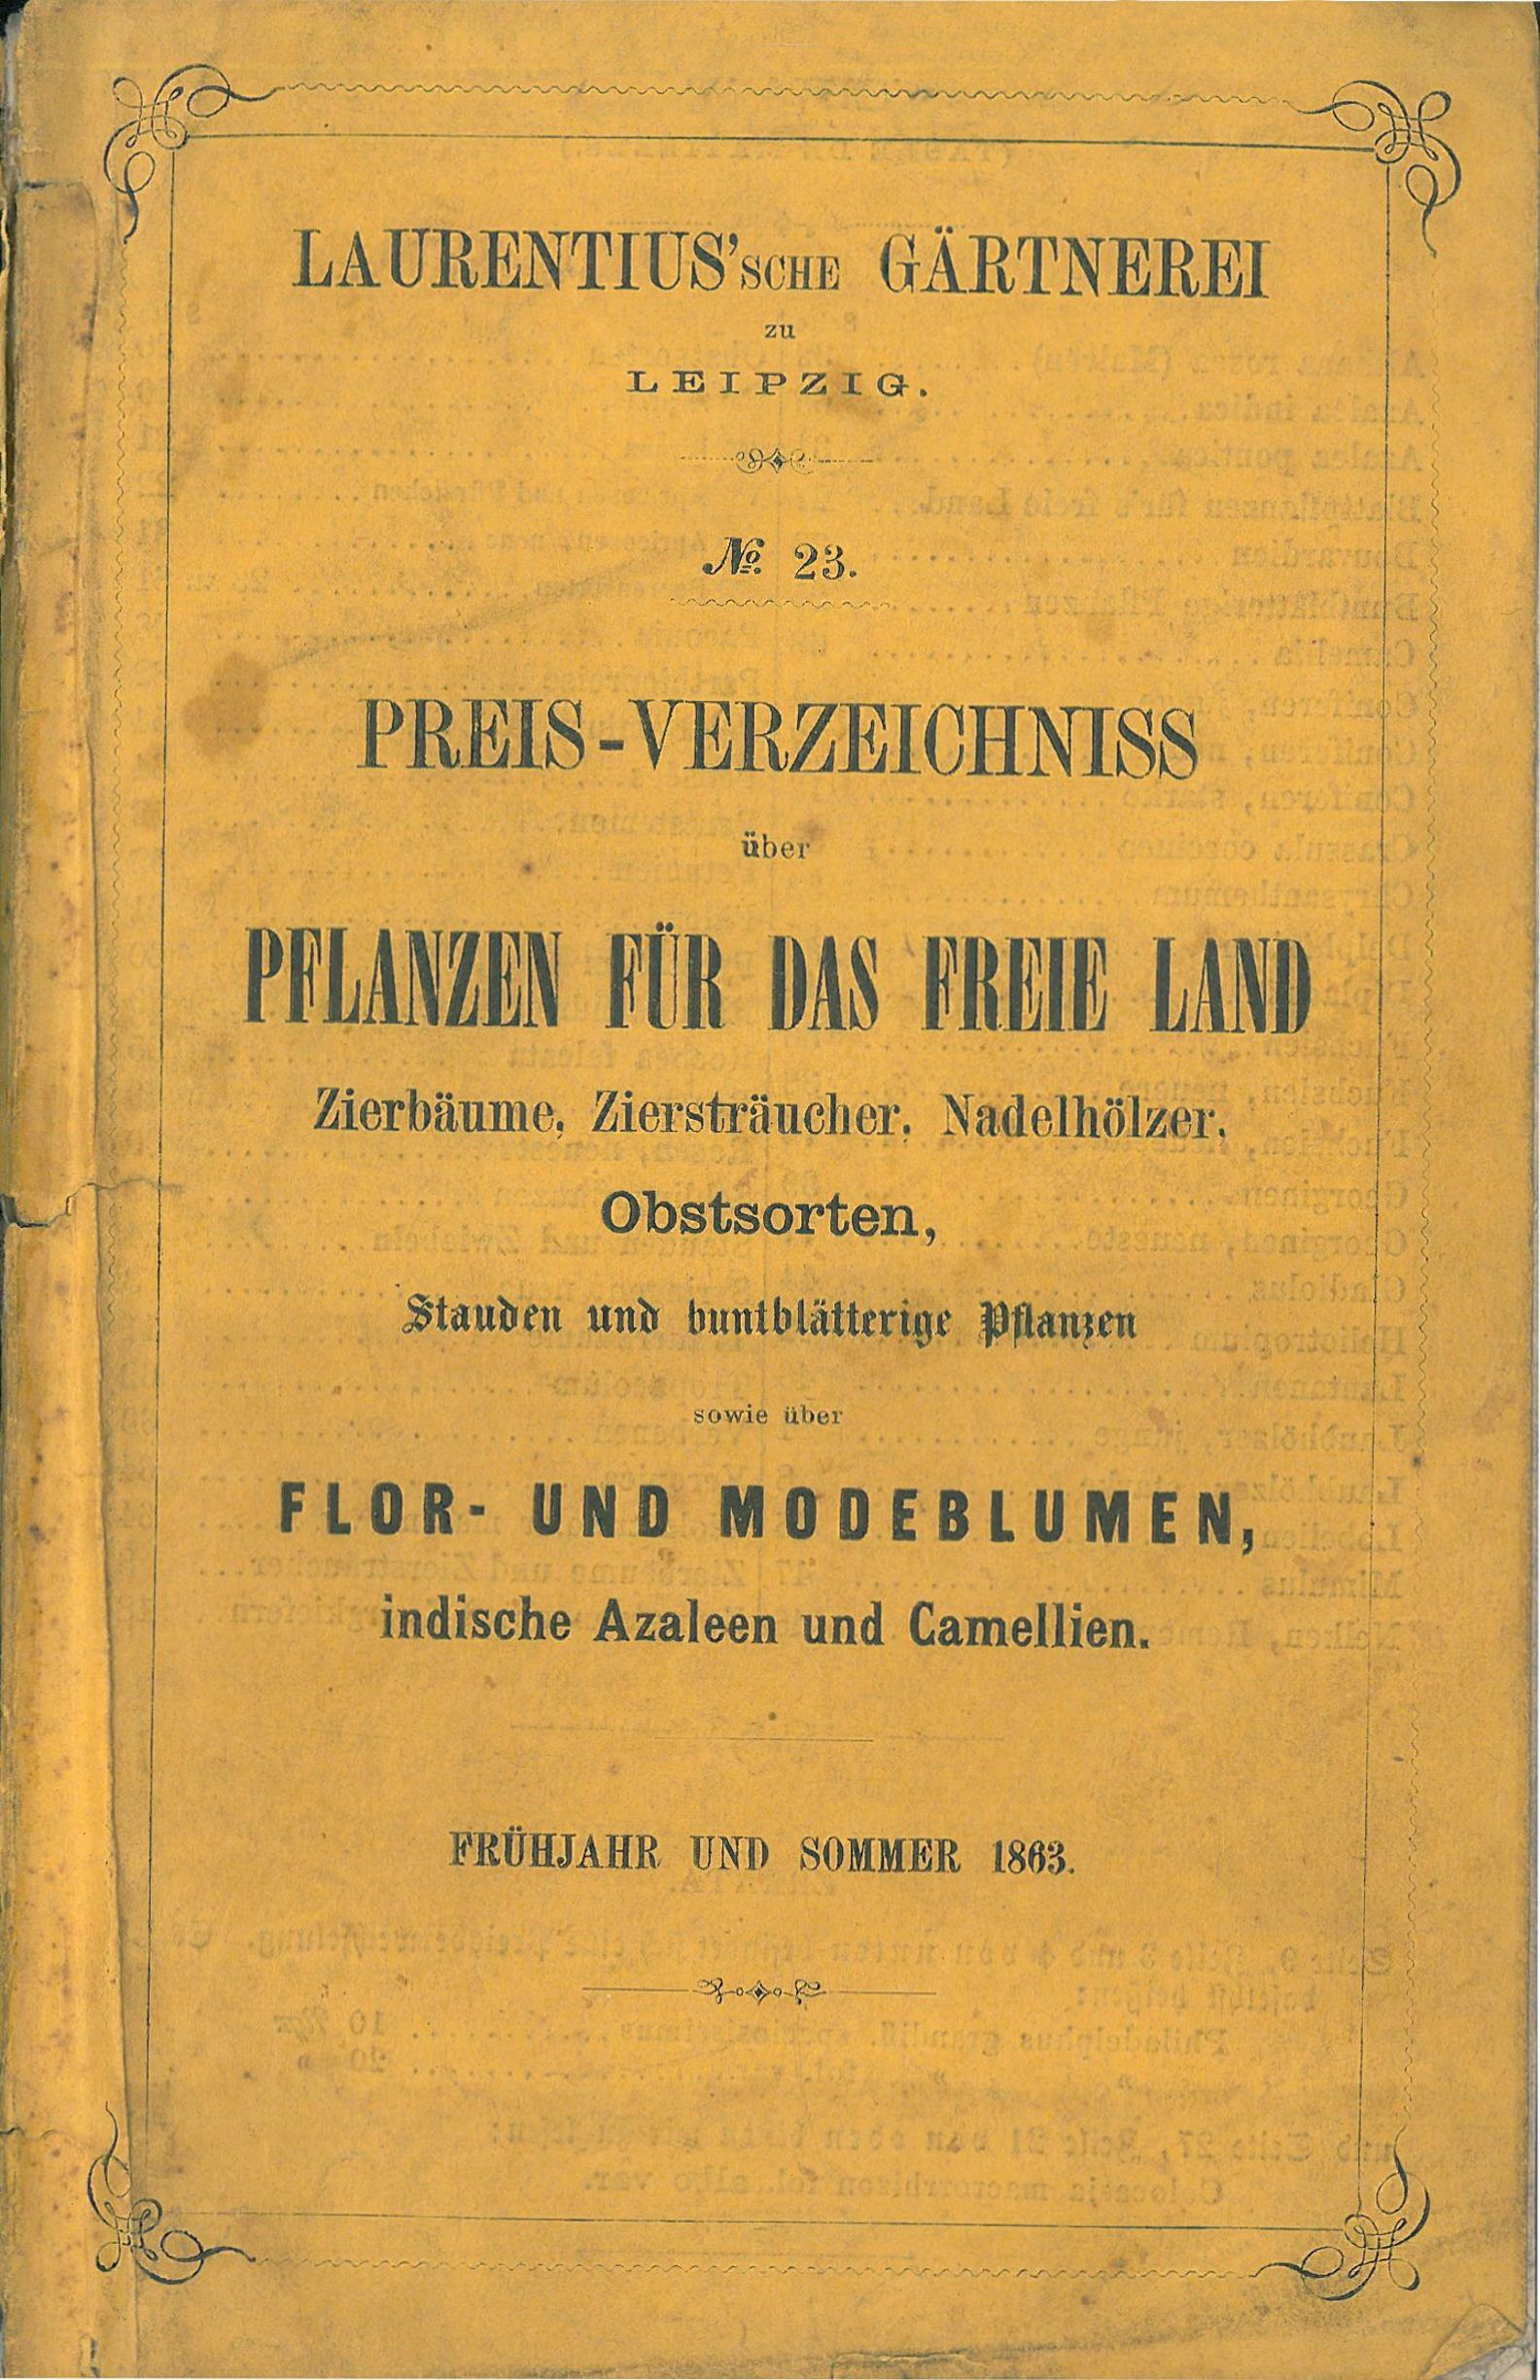 Titelbild Laurentius'sche Gärtnerei Leipzig 1863